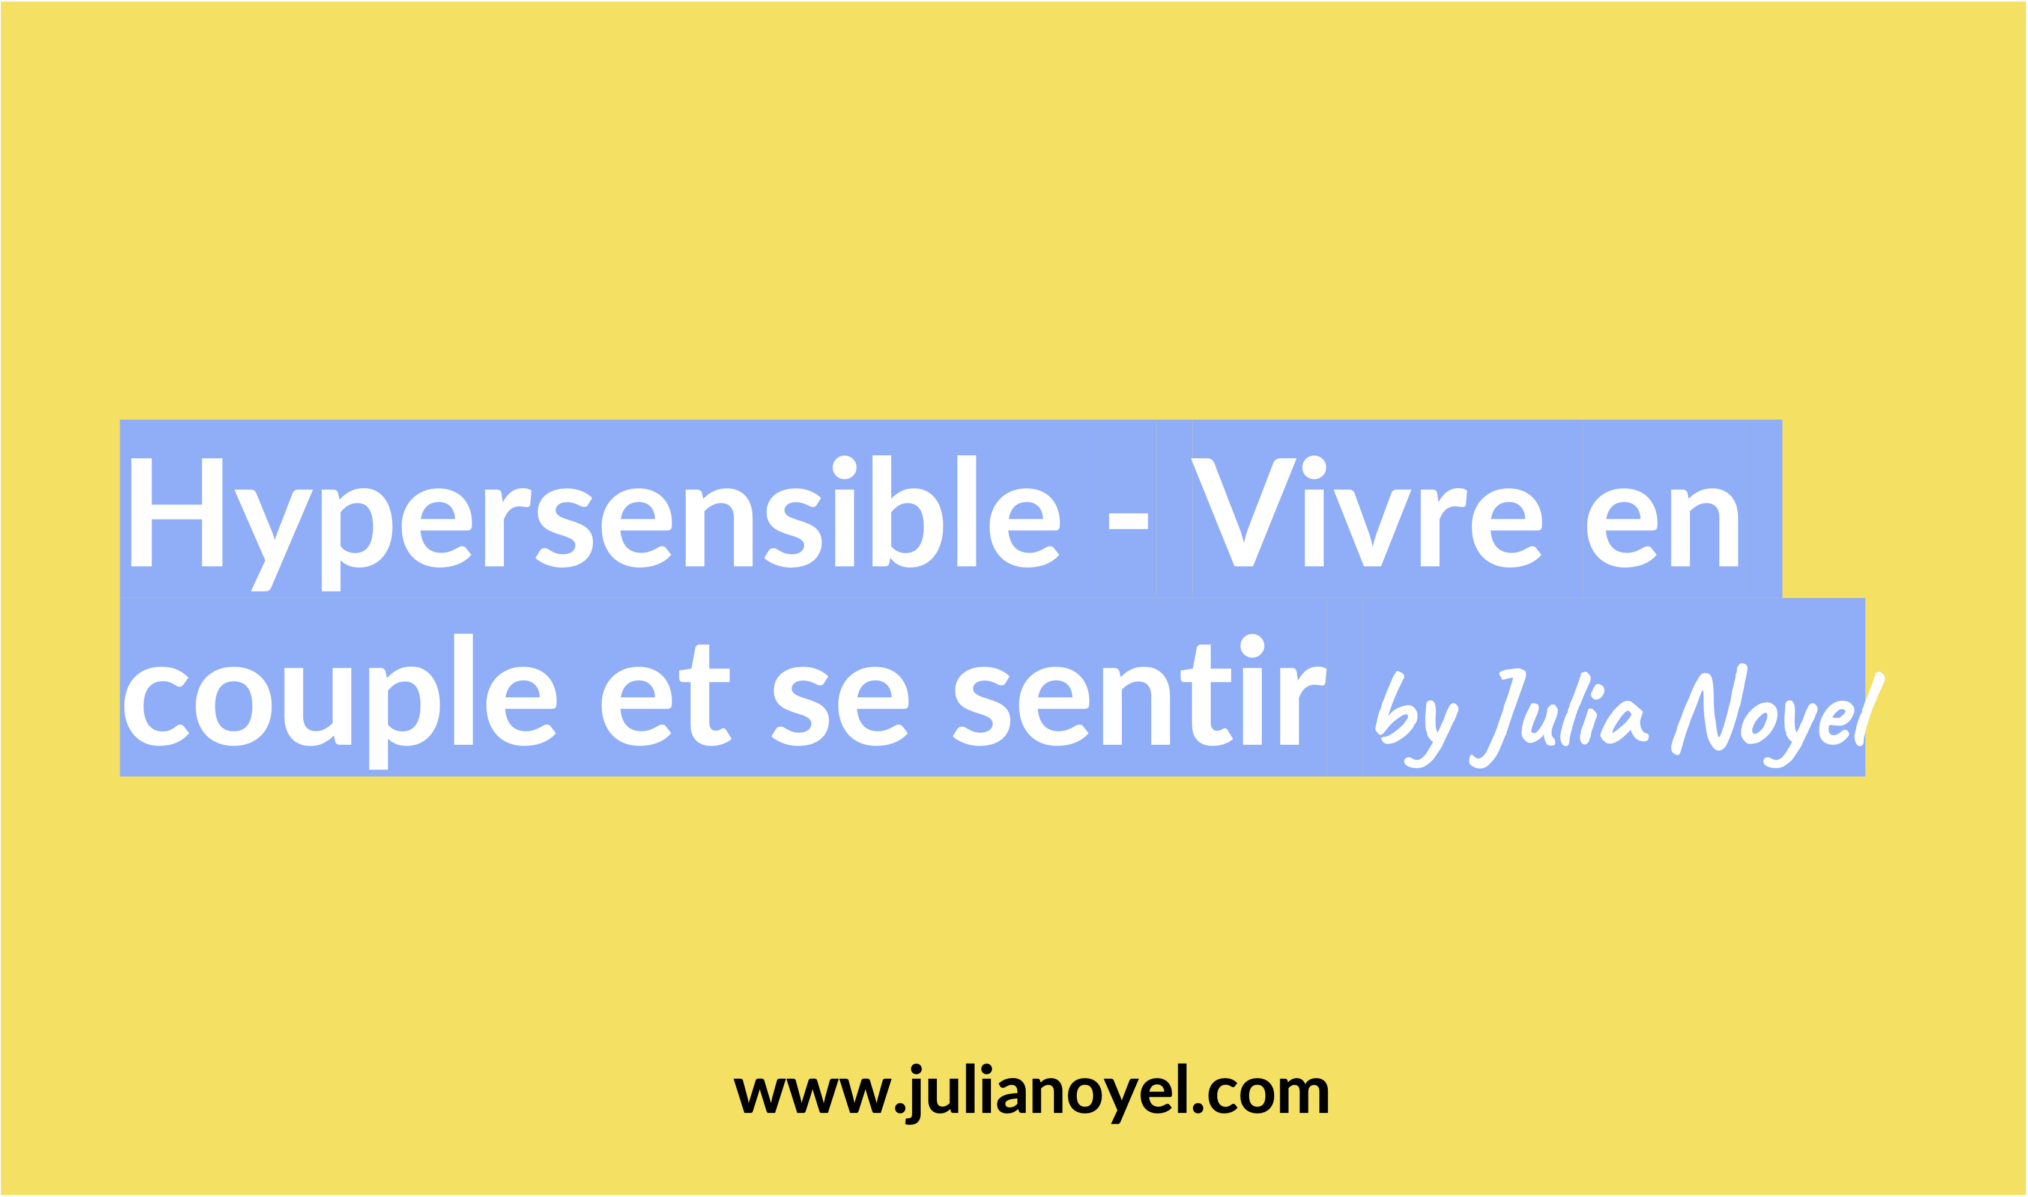 Hypersensible - Vivre en couple et se sentir by Julia Noyel